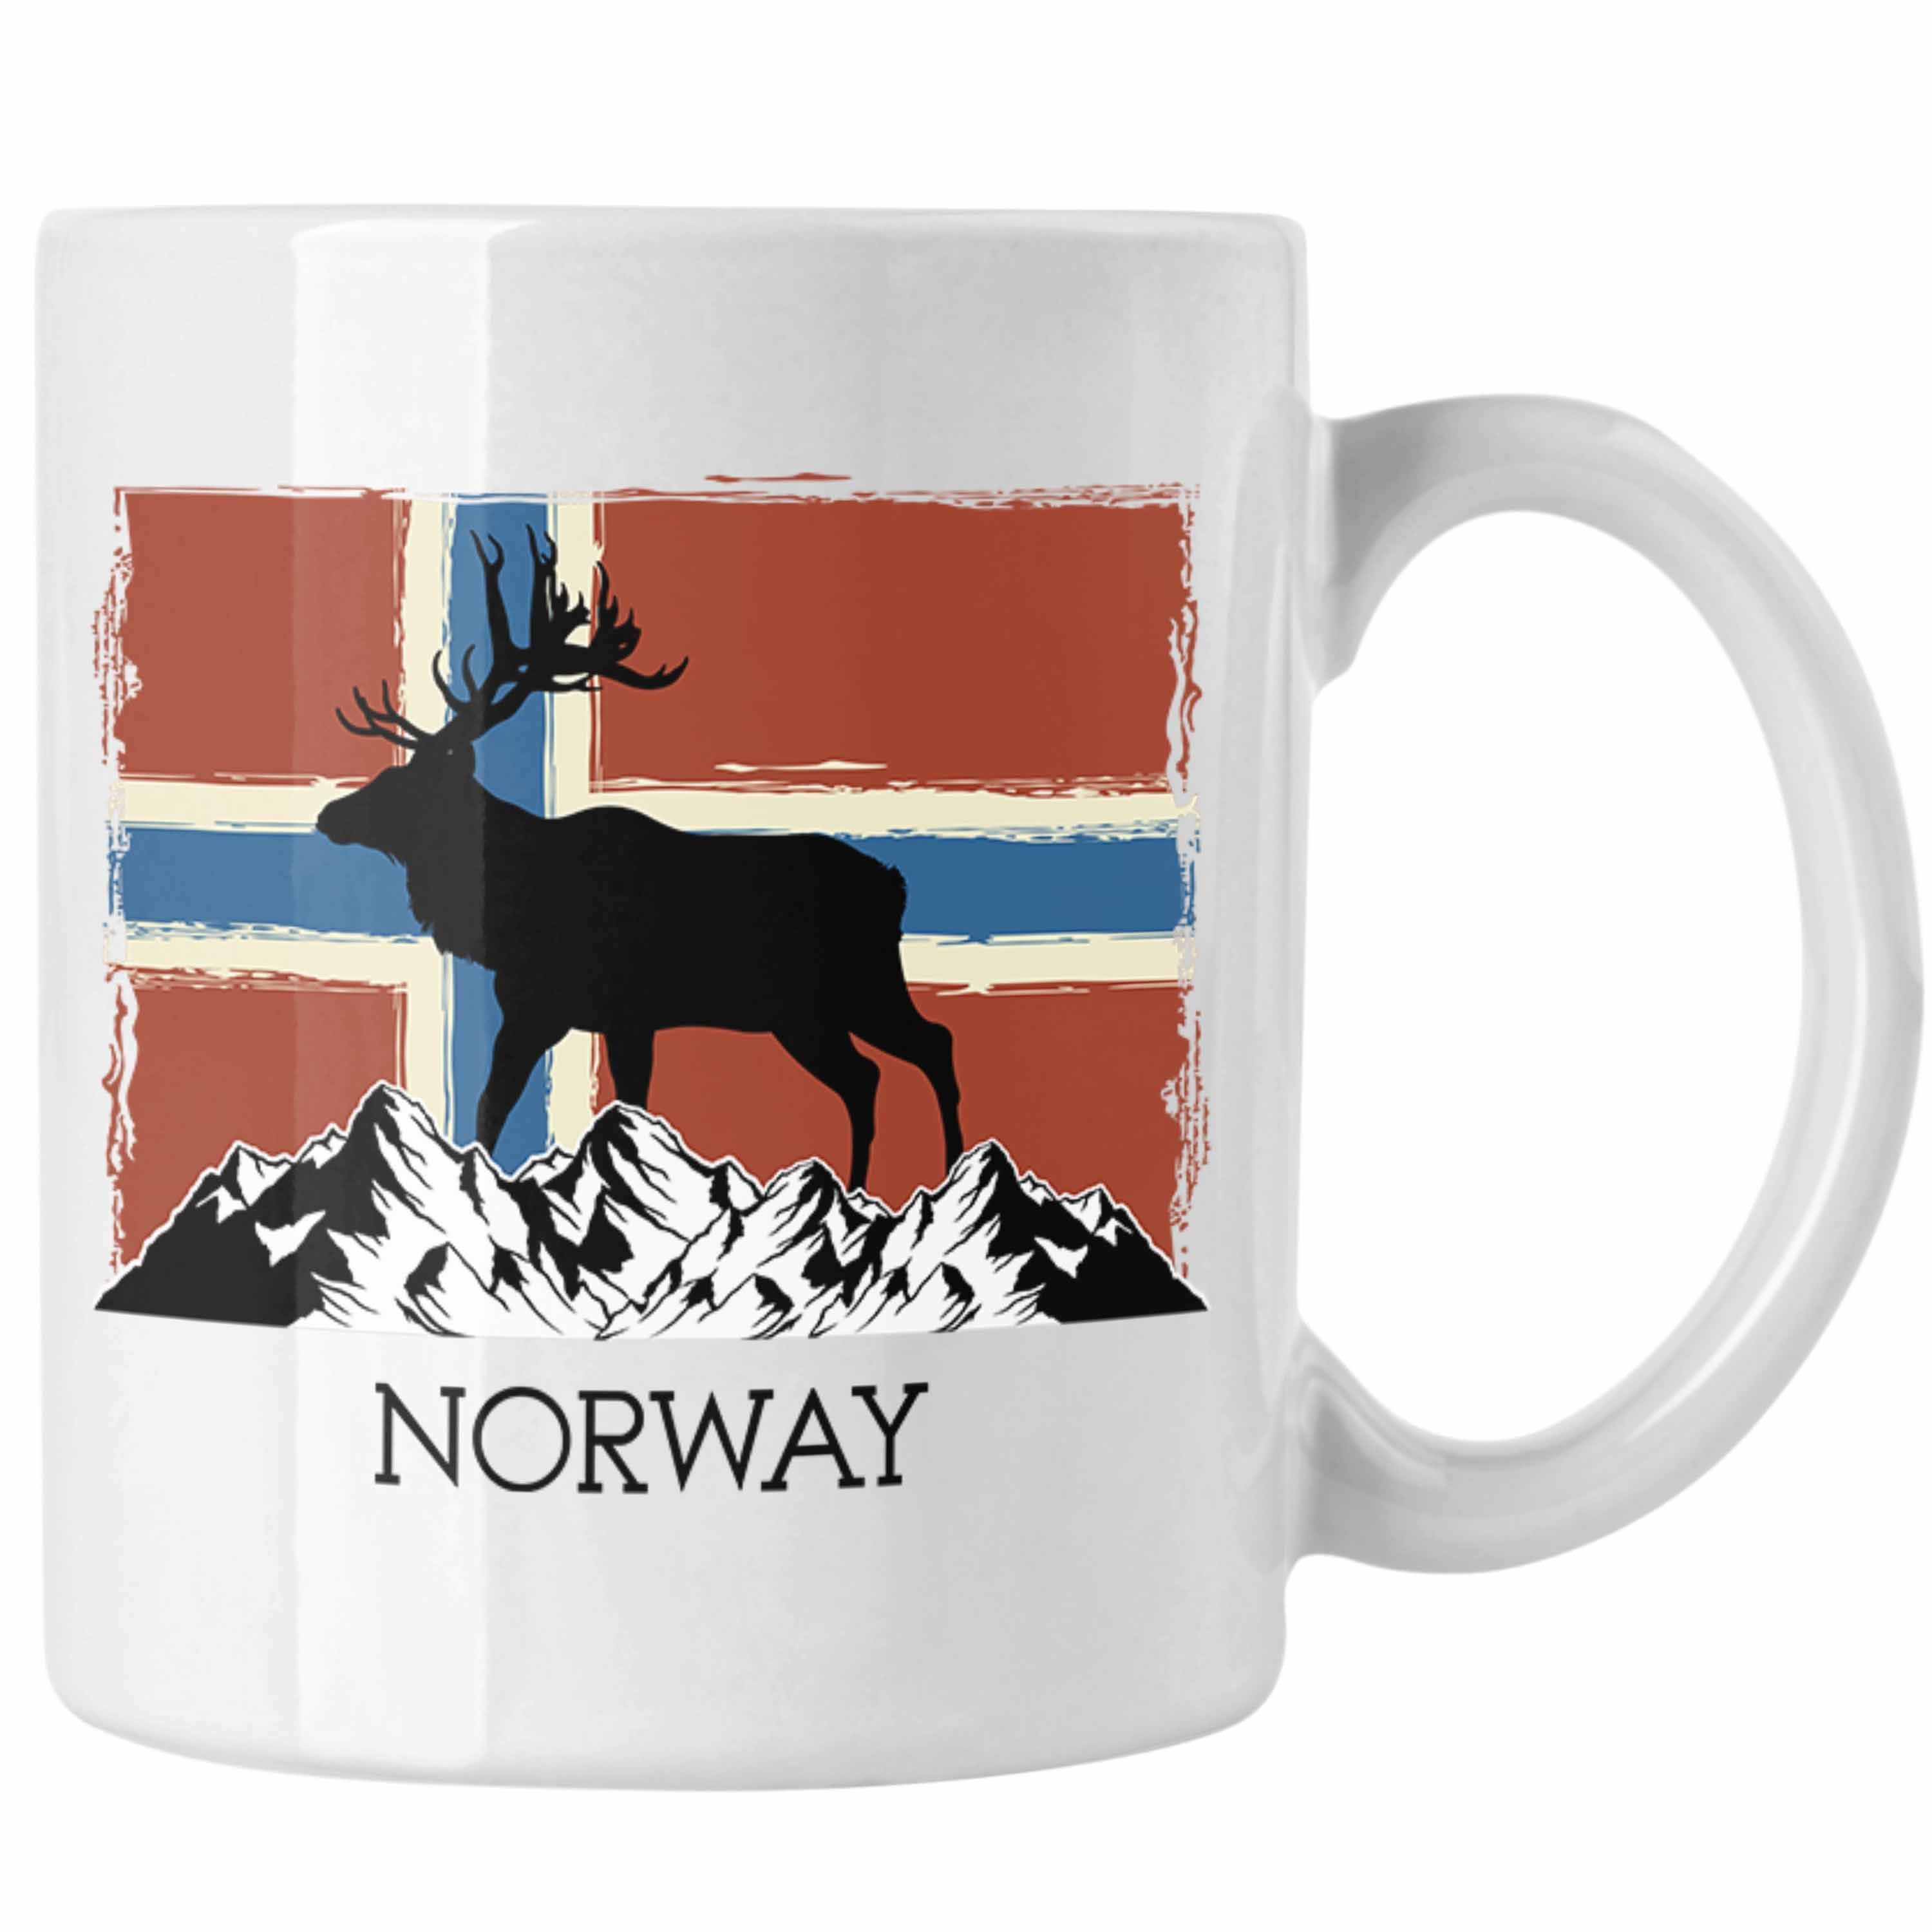 Nordkap Weiss Trendation Flagge Tasse Norwegen Norway - Trendation Geschenke Tasse Elch